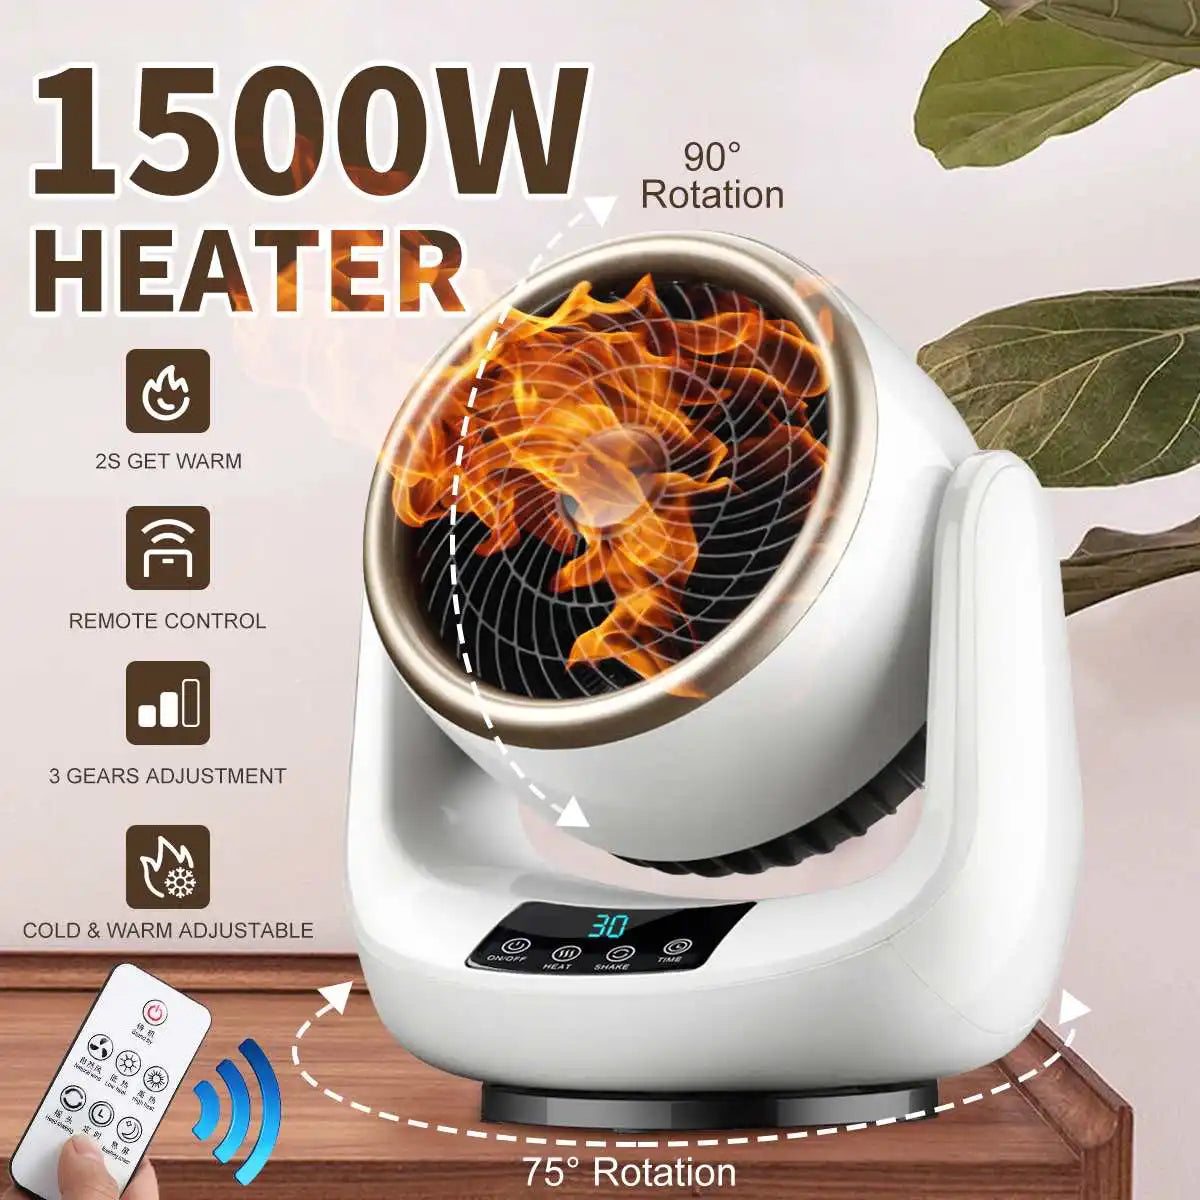 1500W Remote Control Electric Heater 3 Gears Adjustable Home Office Bathroom Radiator Electric Heater Portable Desktop Heater